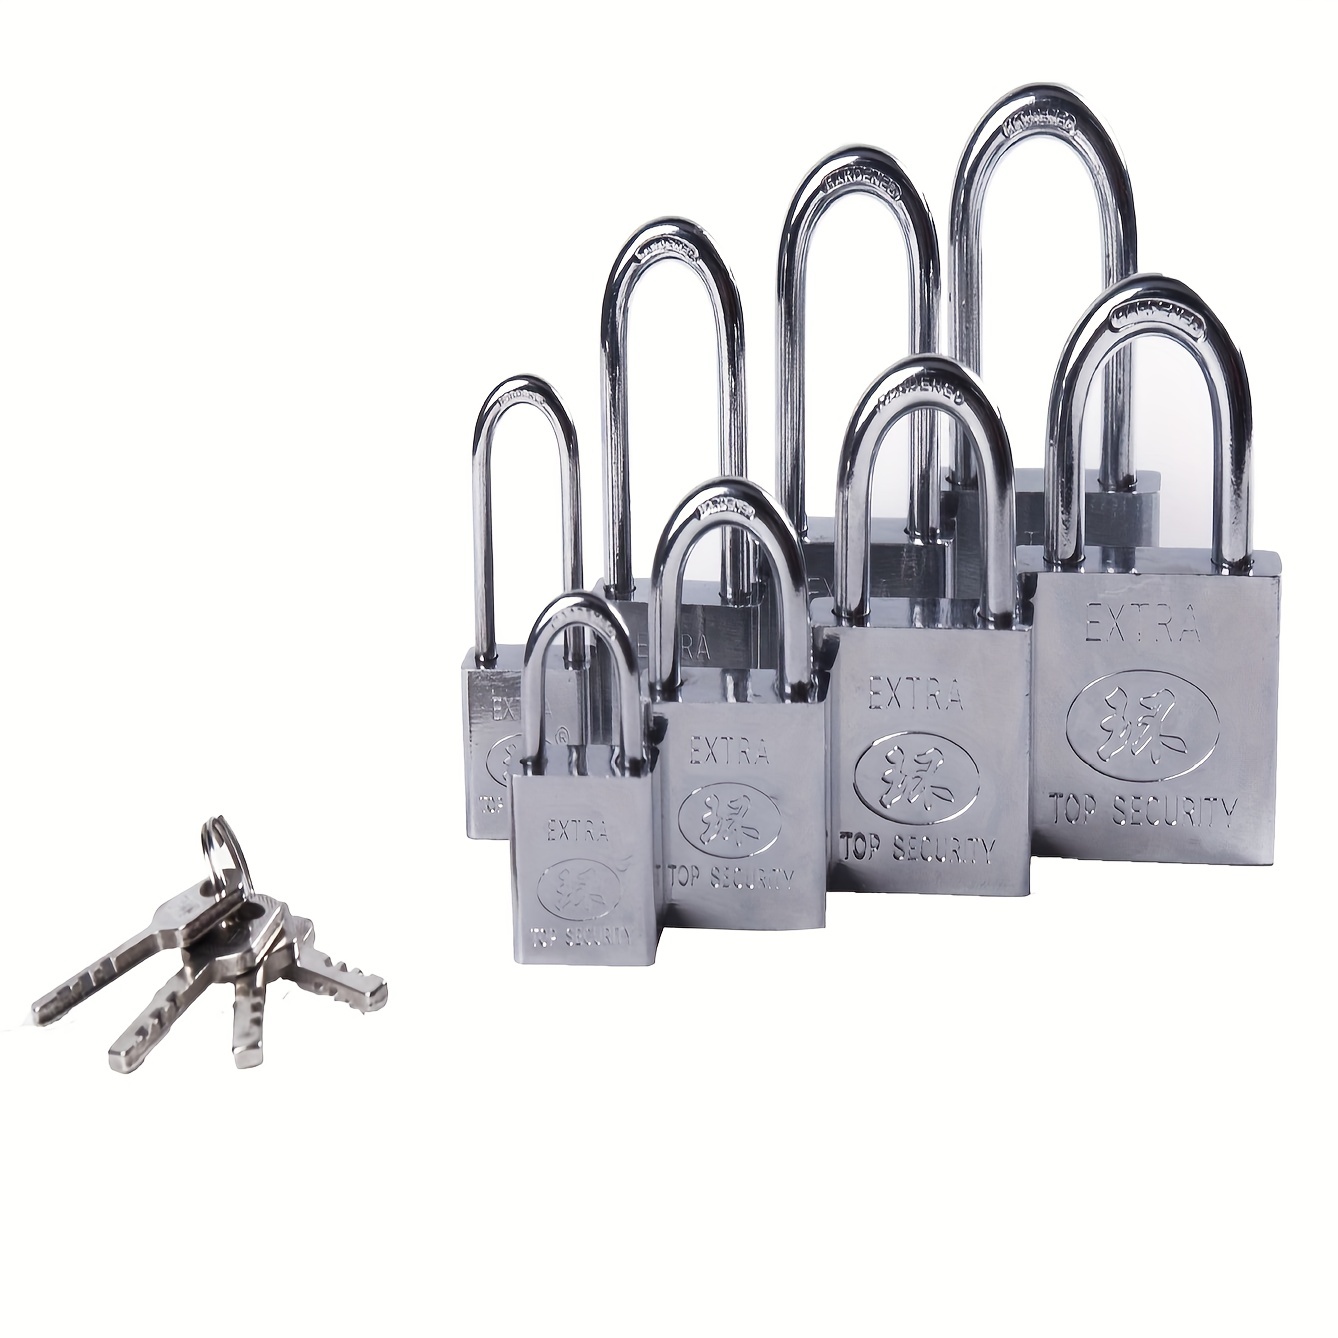 Litoexpe 10 Pcs Suitcase Locks with Keys, Small Luggage Locks